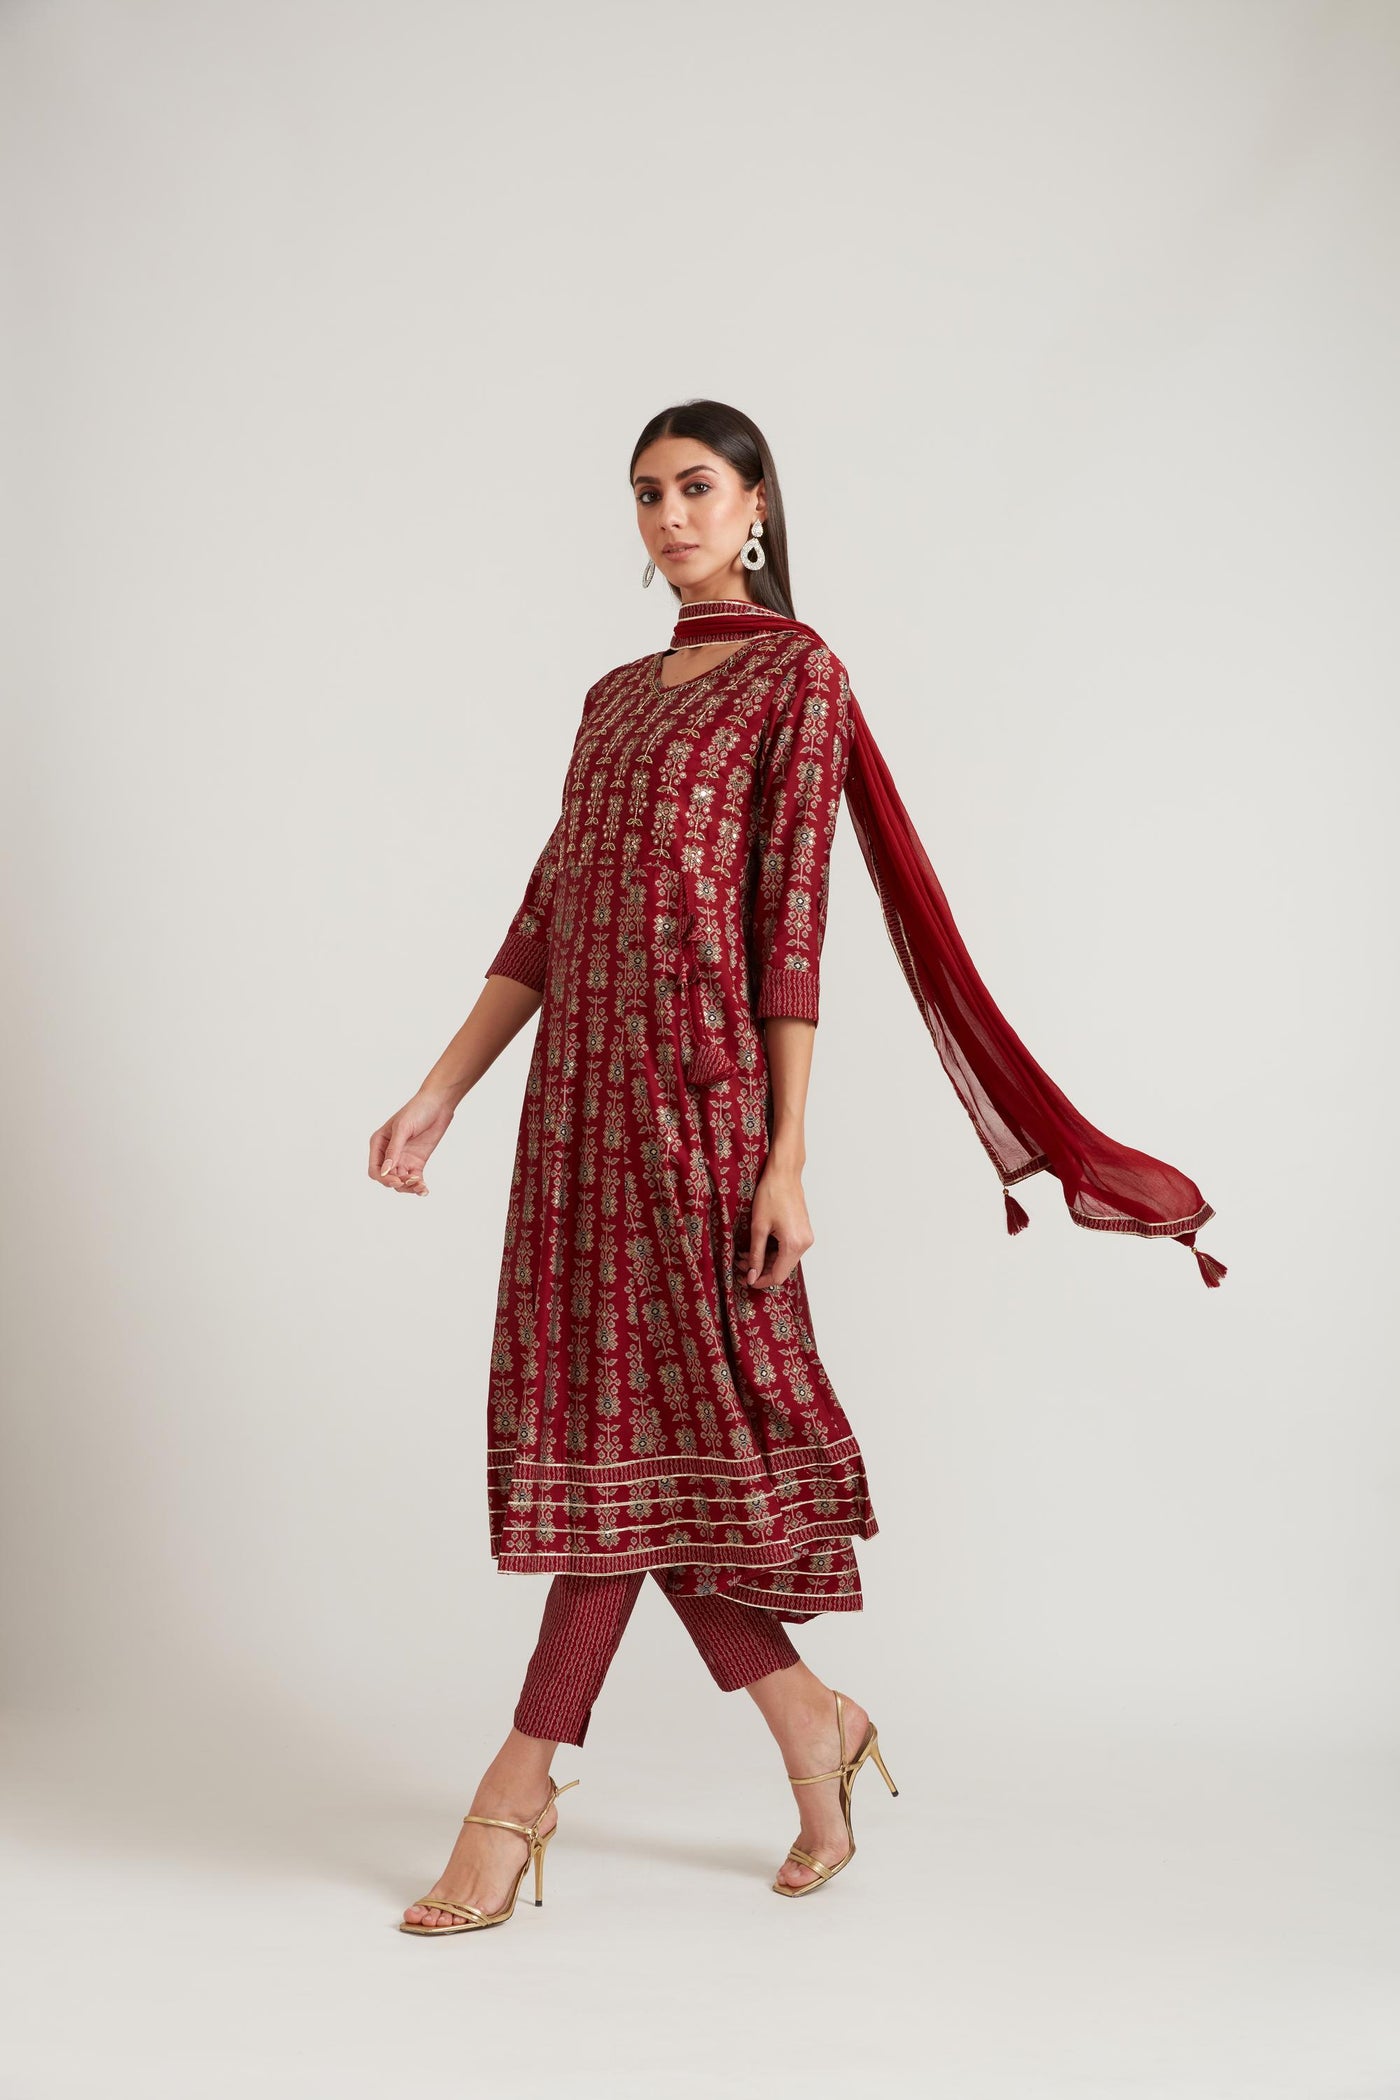 Neeru's Maroon Color Model Fabric Suit